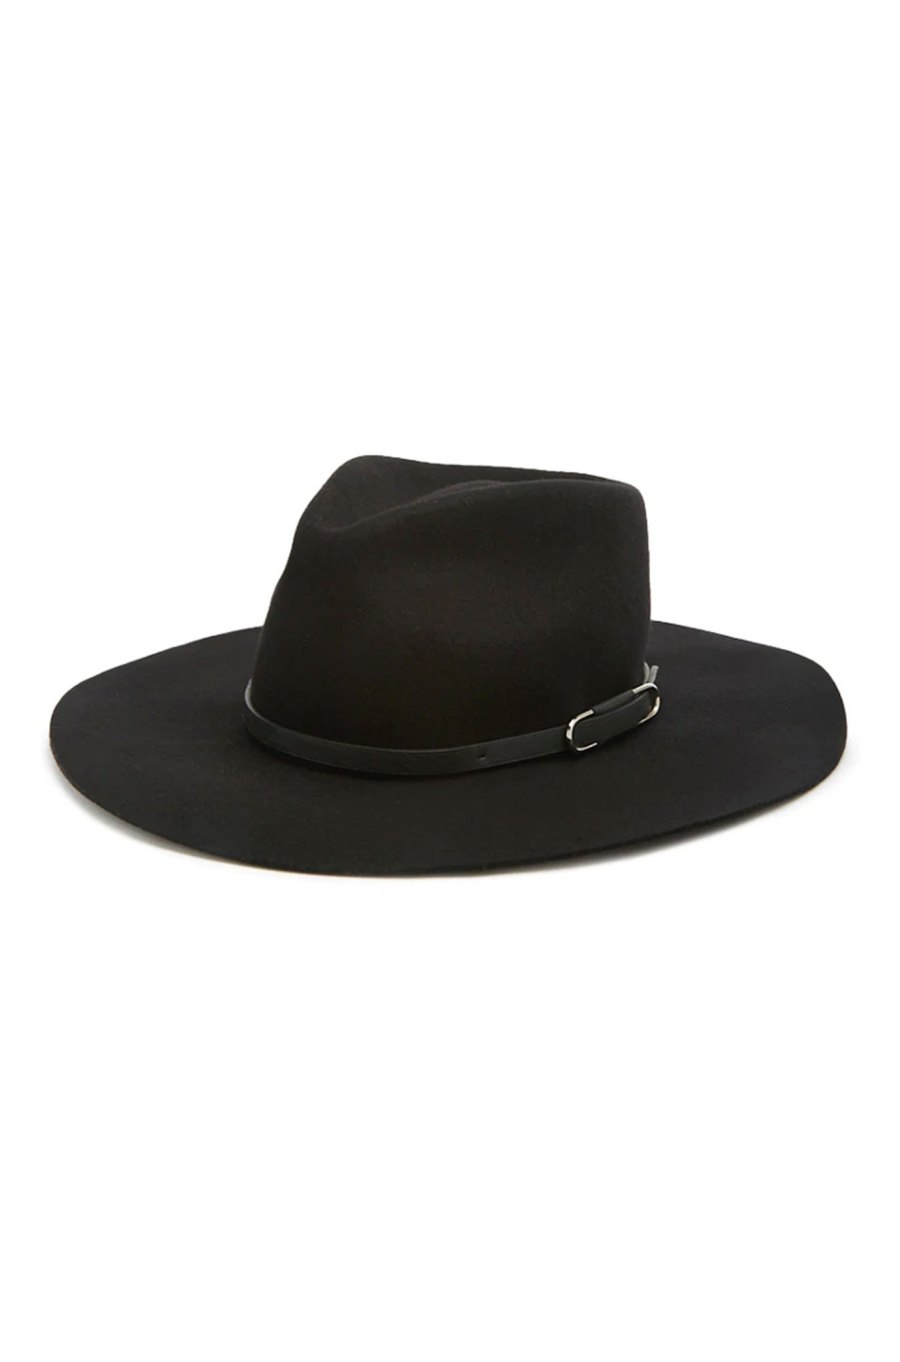 Black Panama Hats, Fedoras Inspired by Gigi Hadid: Shop